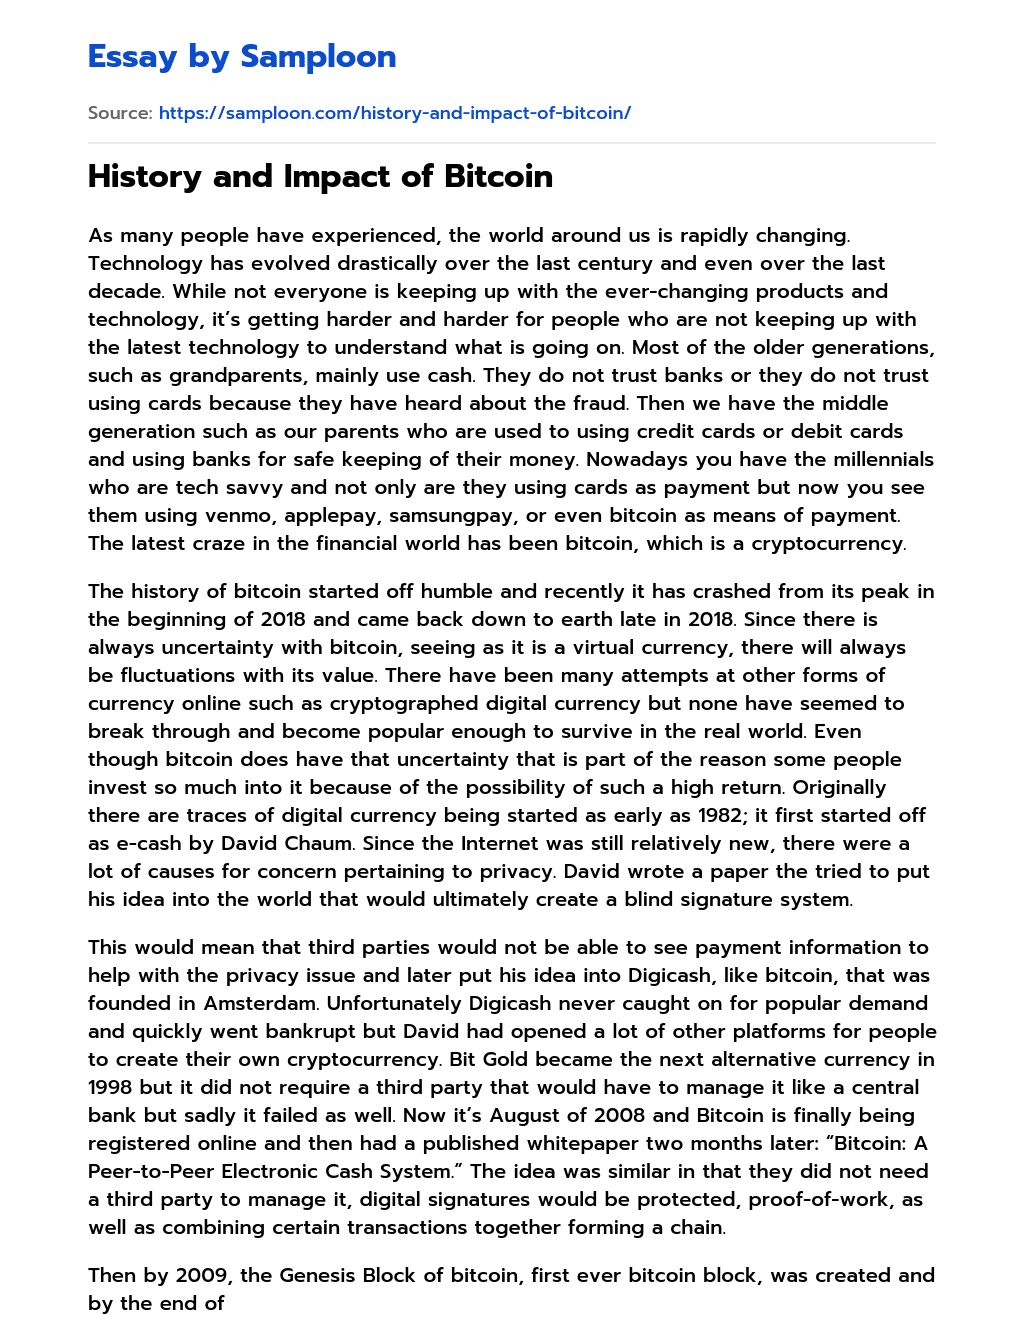 History and Impact of Bitcoin essay